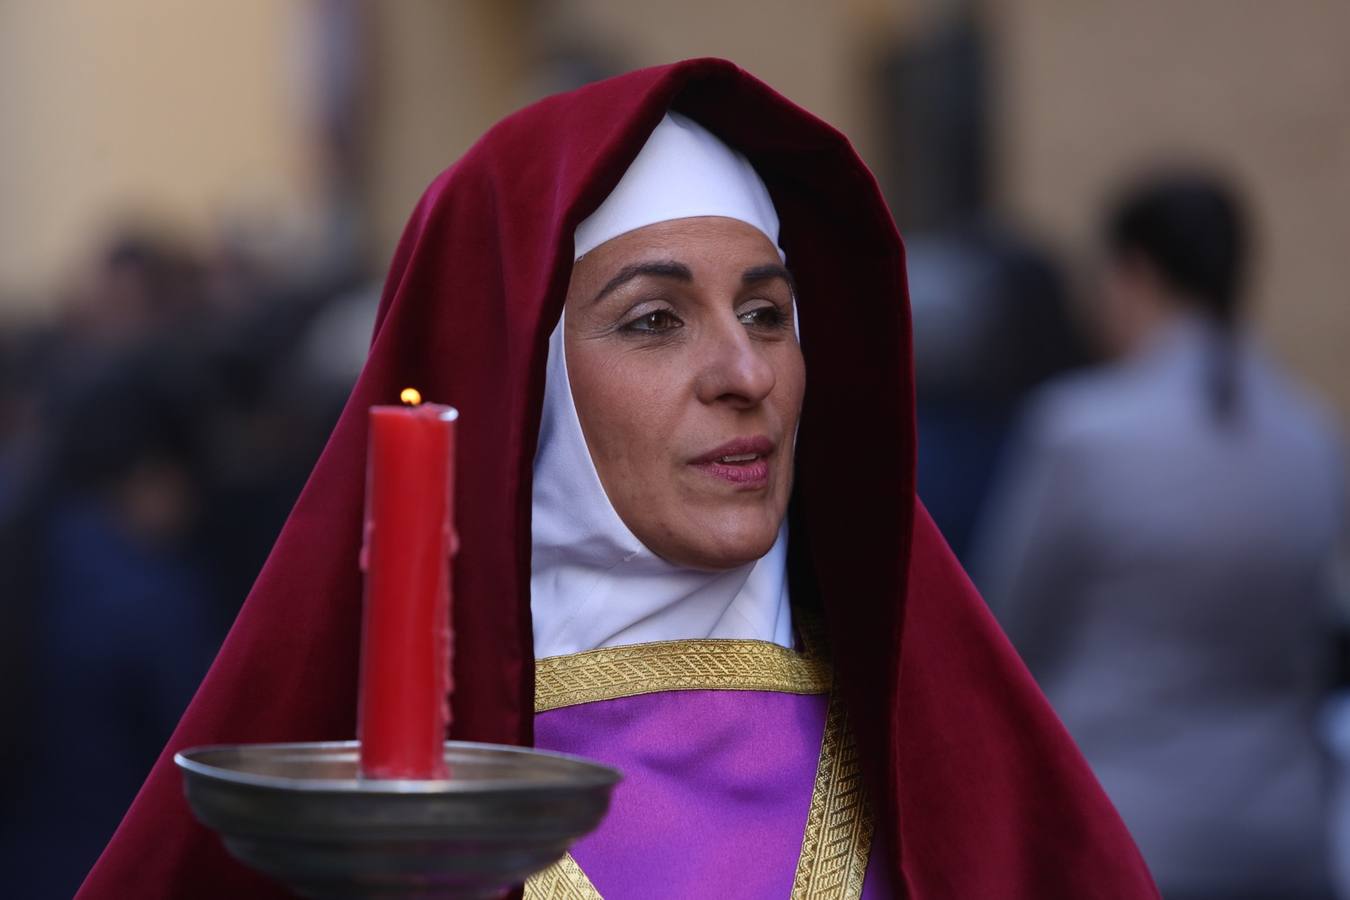 FOTOS: Afligidos en la Semana Santa de Cádiz 2018